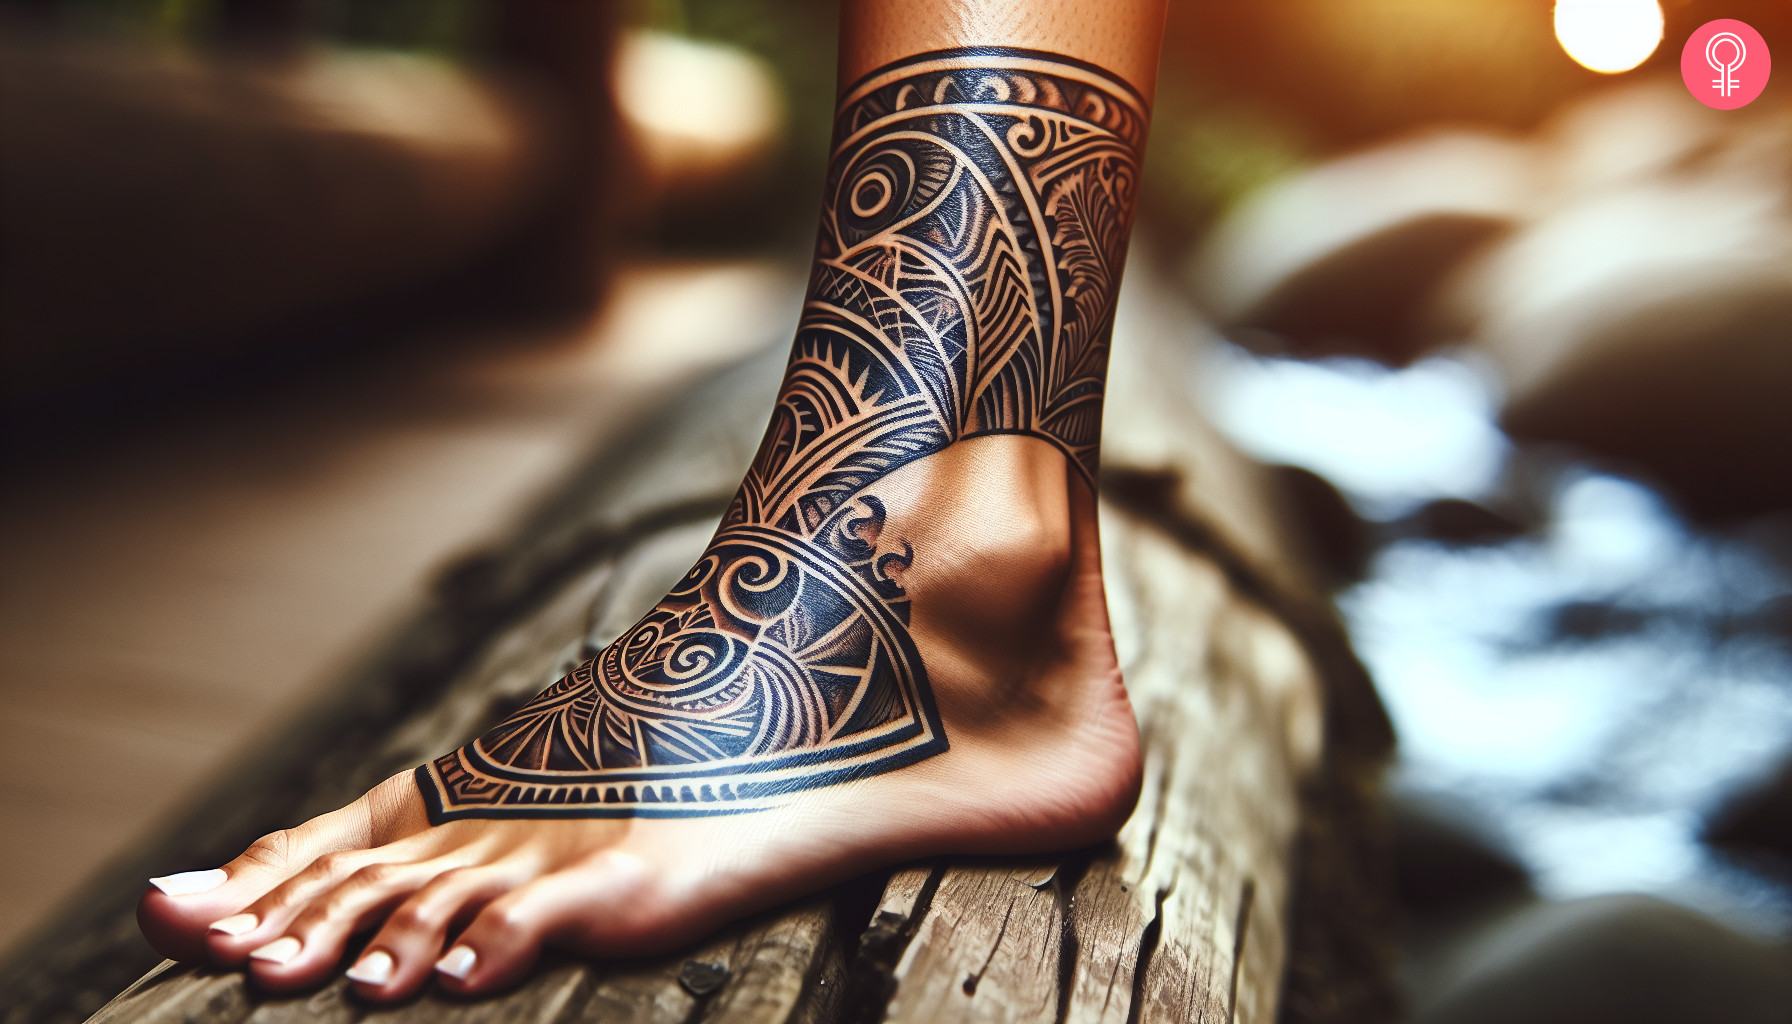 Small maori tattoo design on the foot of a man